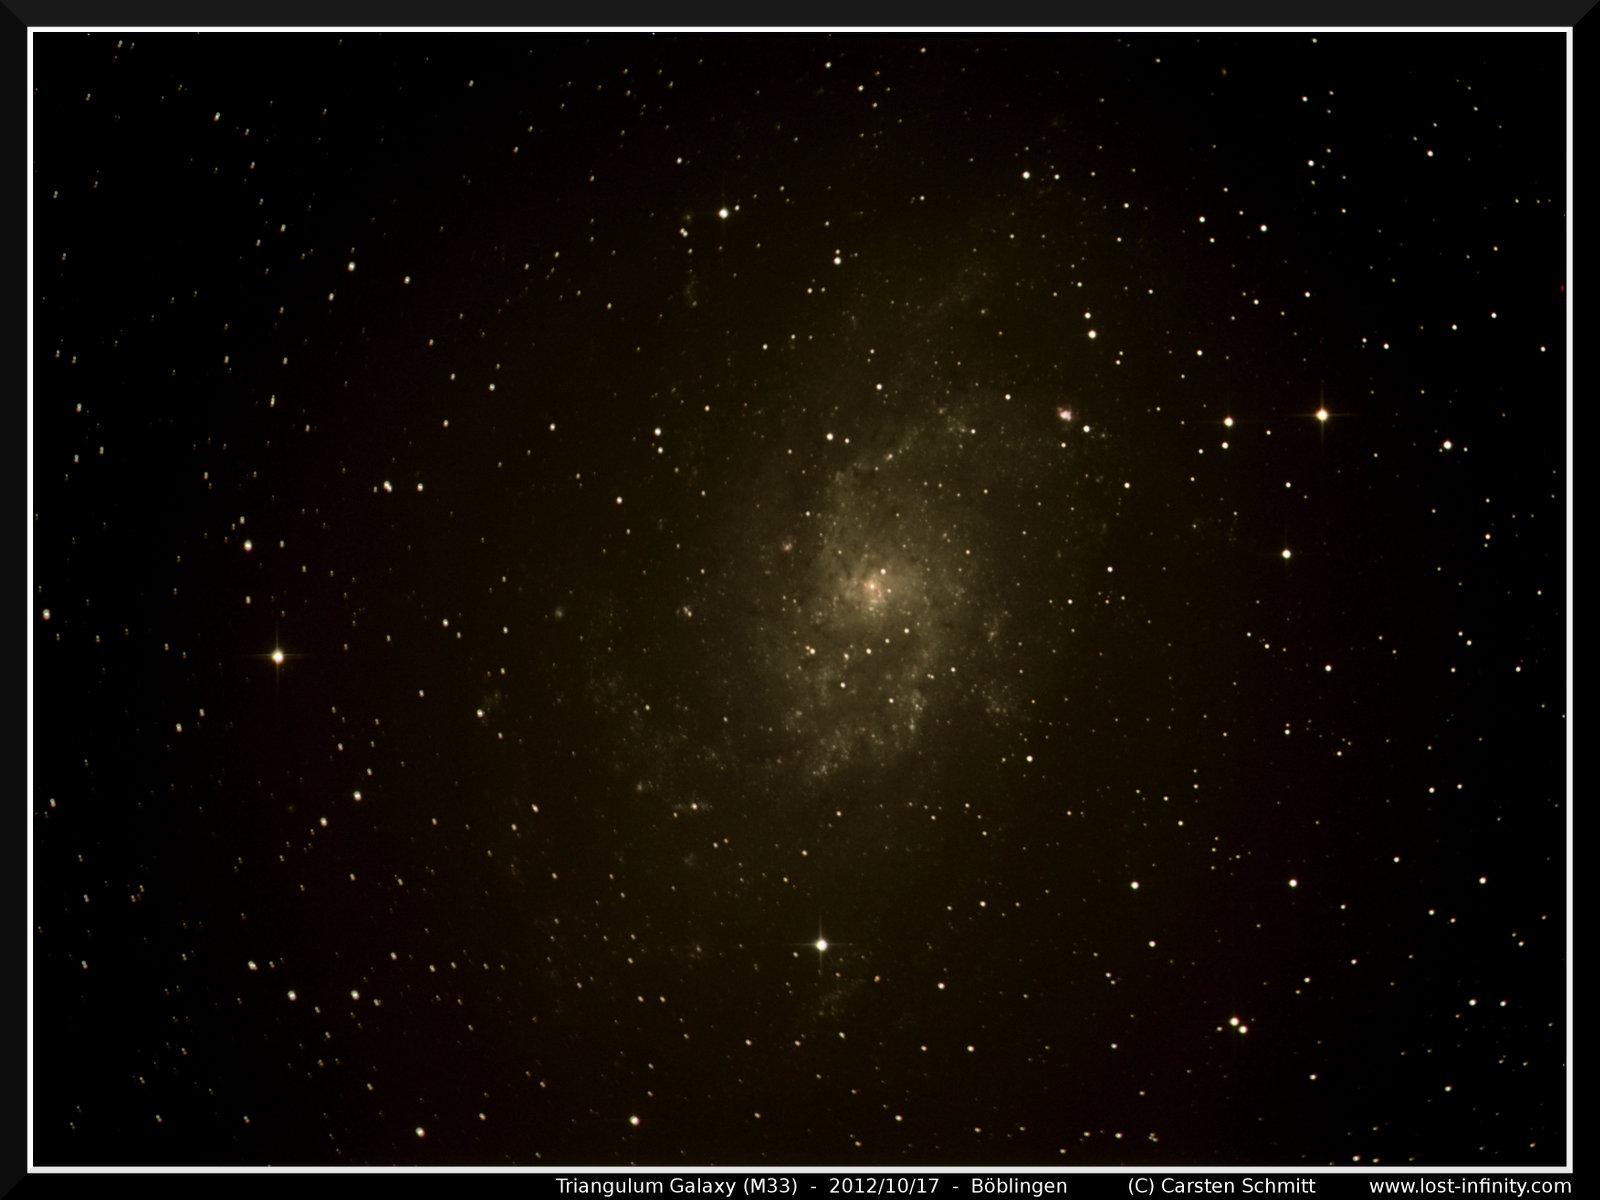 Triangulum Galaxy (M33) - 2012/10/17